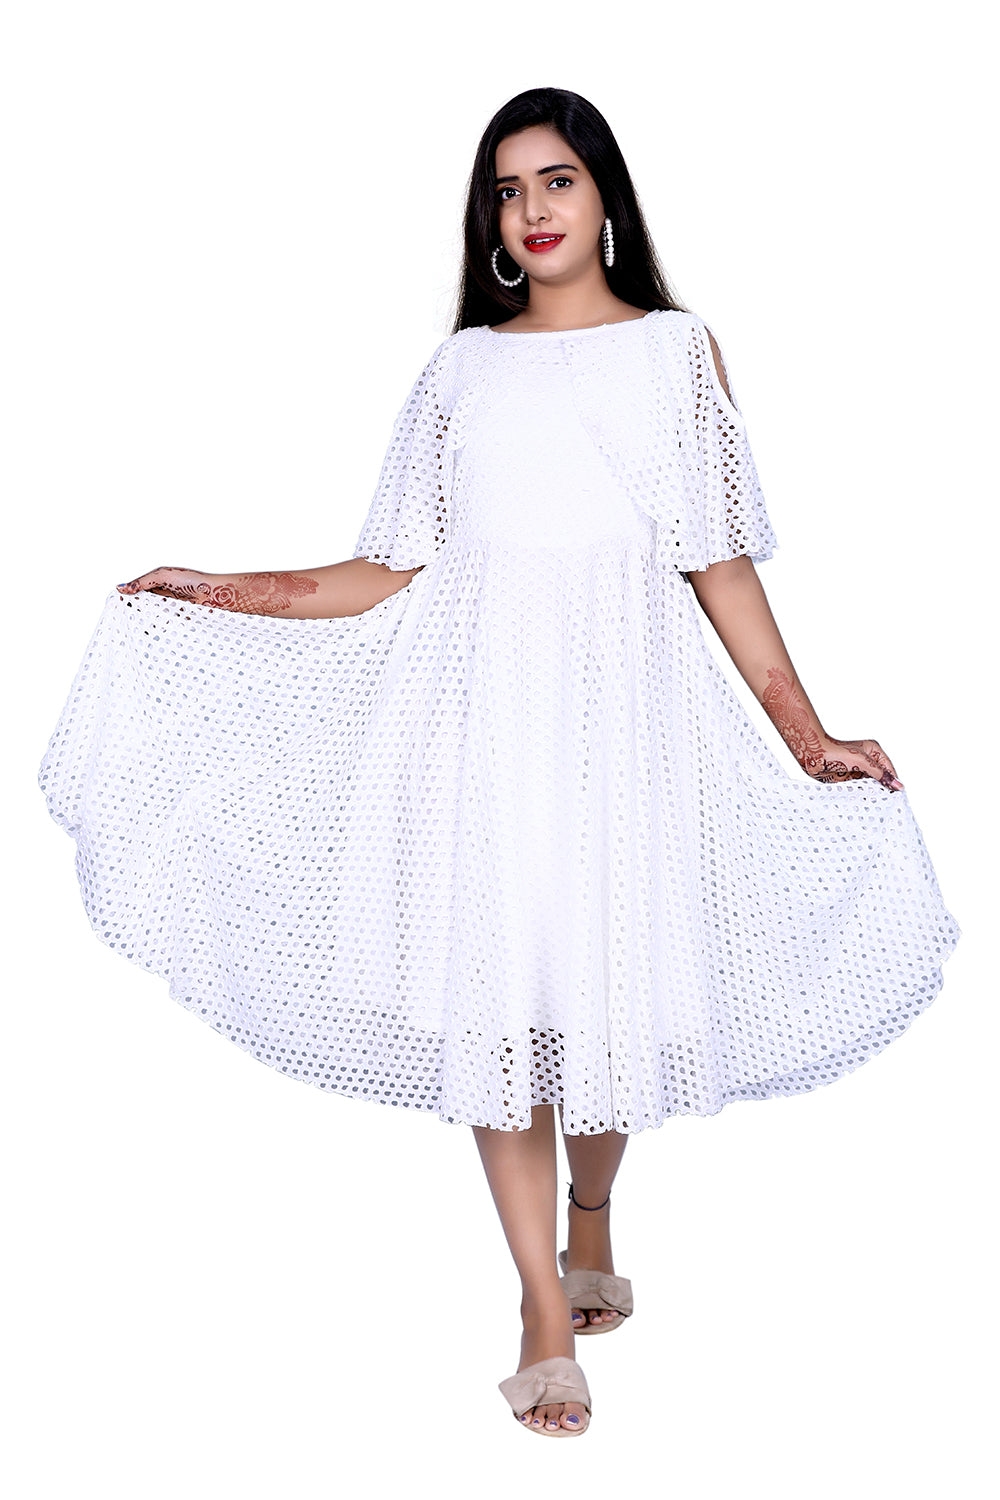 Simple white fashion  White dress long casual Designer dresses Long  dress design